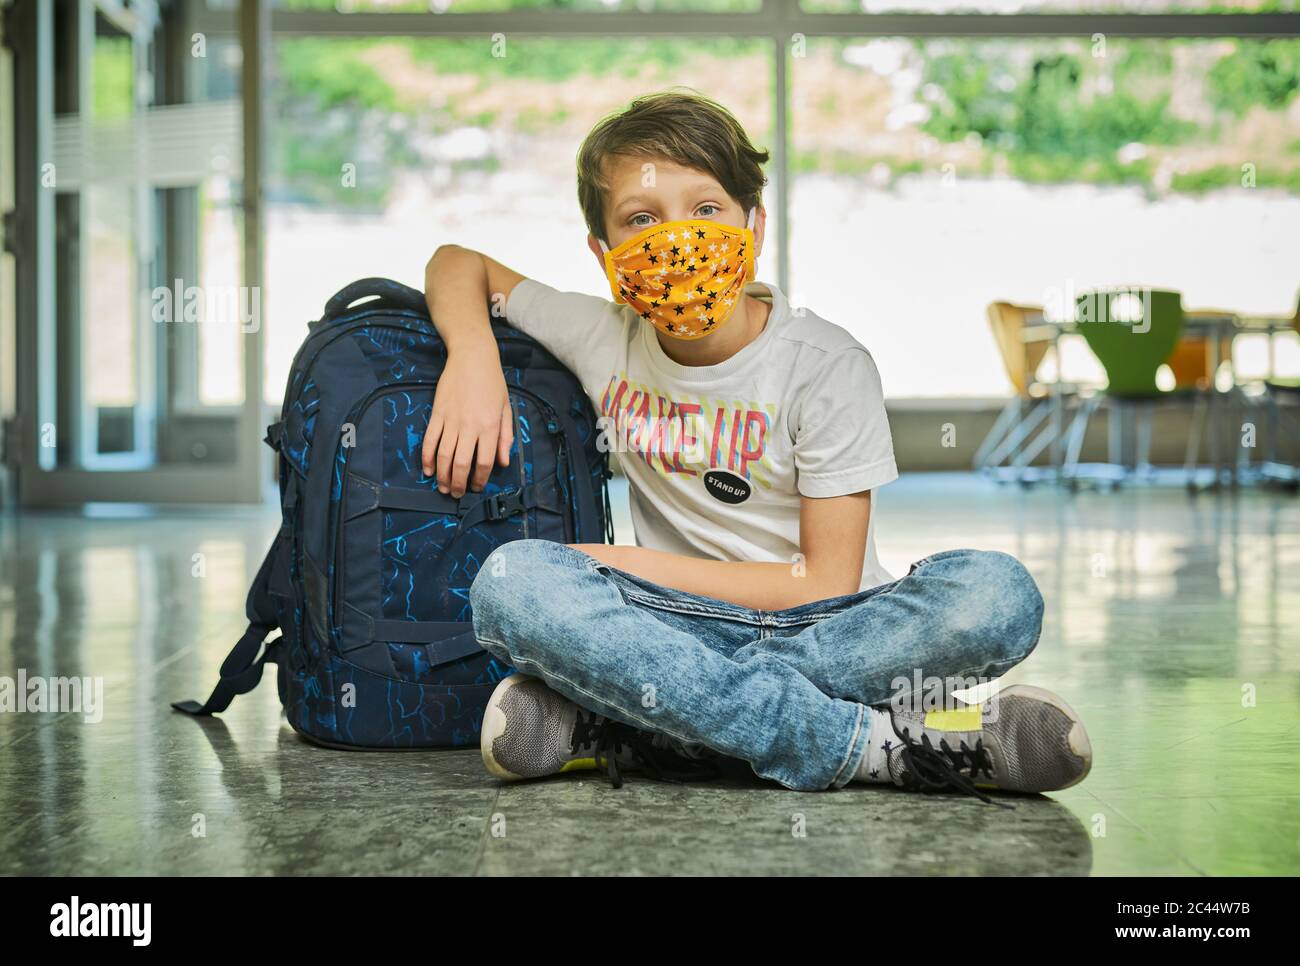 Boy sitting on the floor in school wearing mask Stock Photo